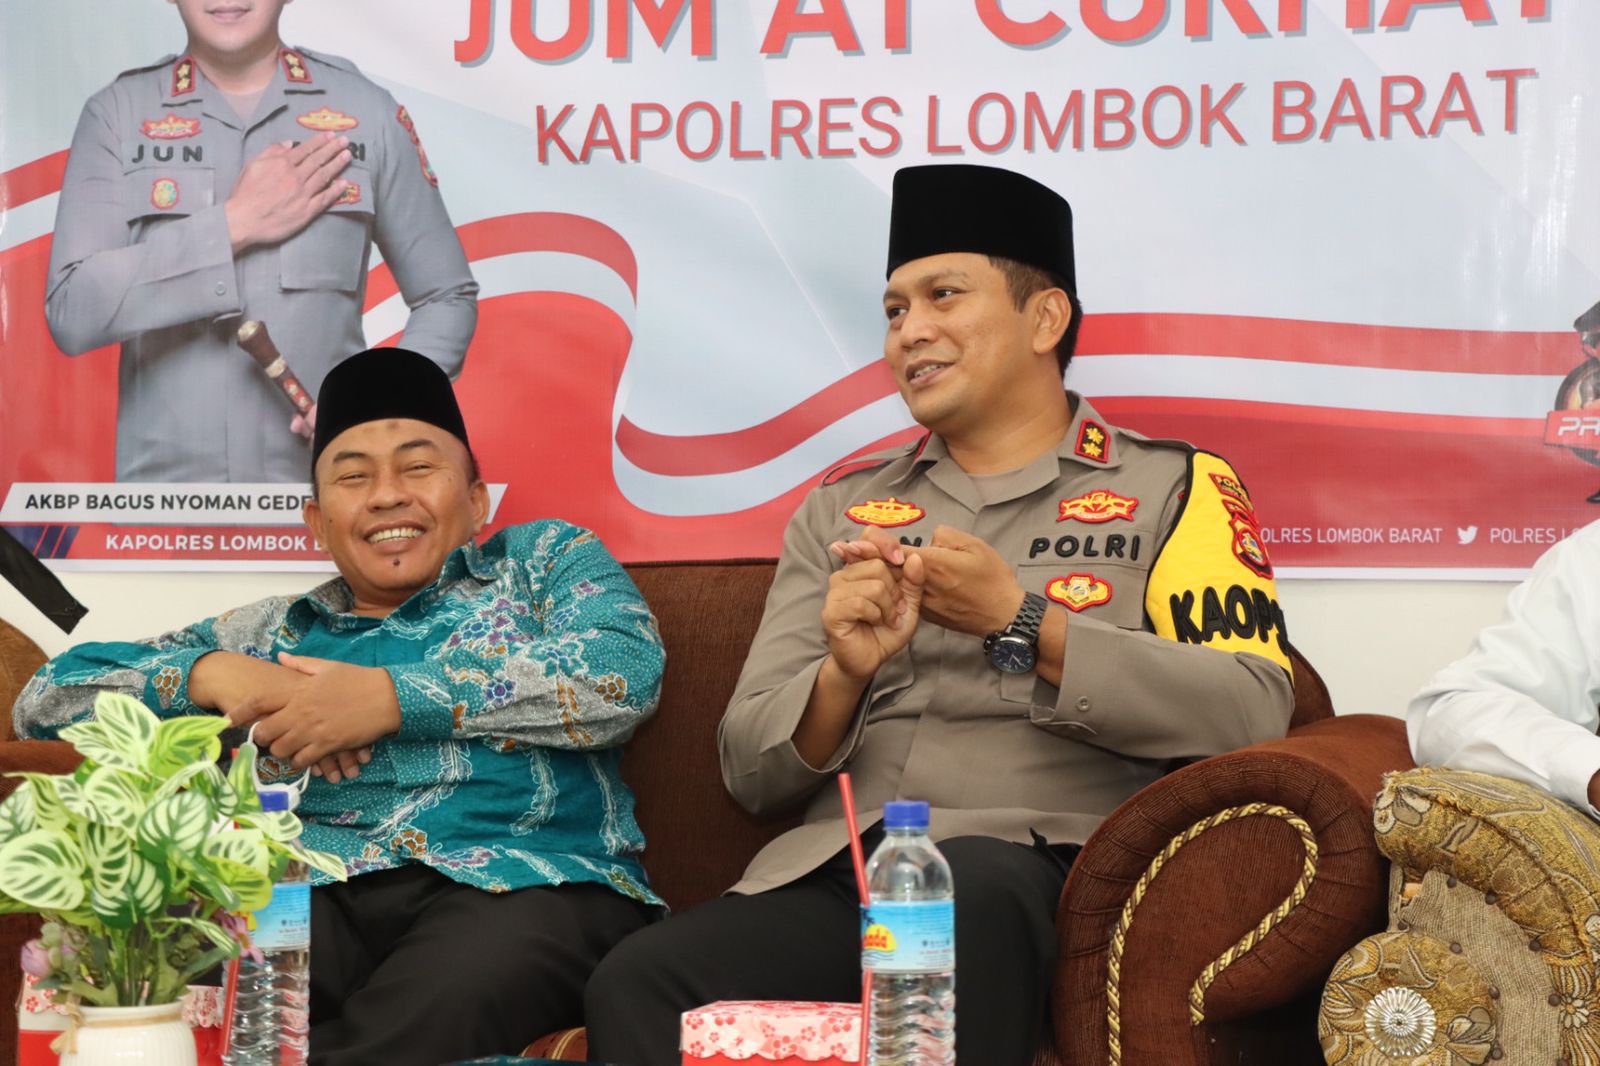 Jumat Curhat Kapolres Lombok Barat di Ponpes Asshohwah Al Islamiyah